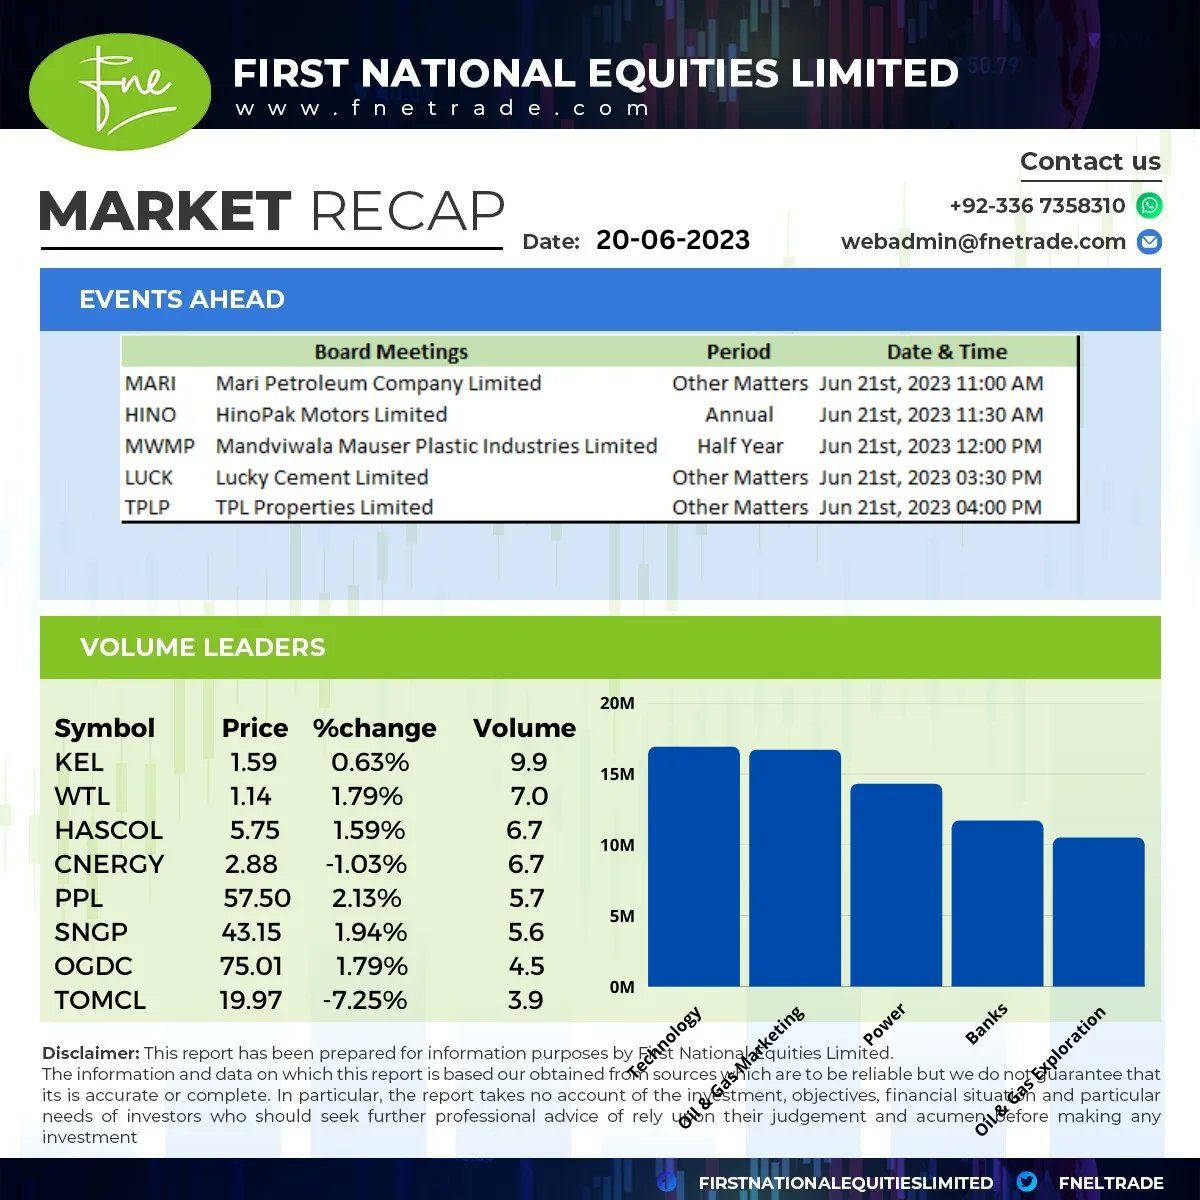 FNEL Market Recap (PSX)
WhatsApp: 0336-7358310
#fnel #marketrecap #psx #stockexchanges